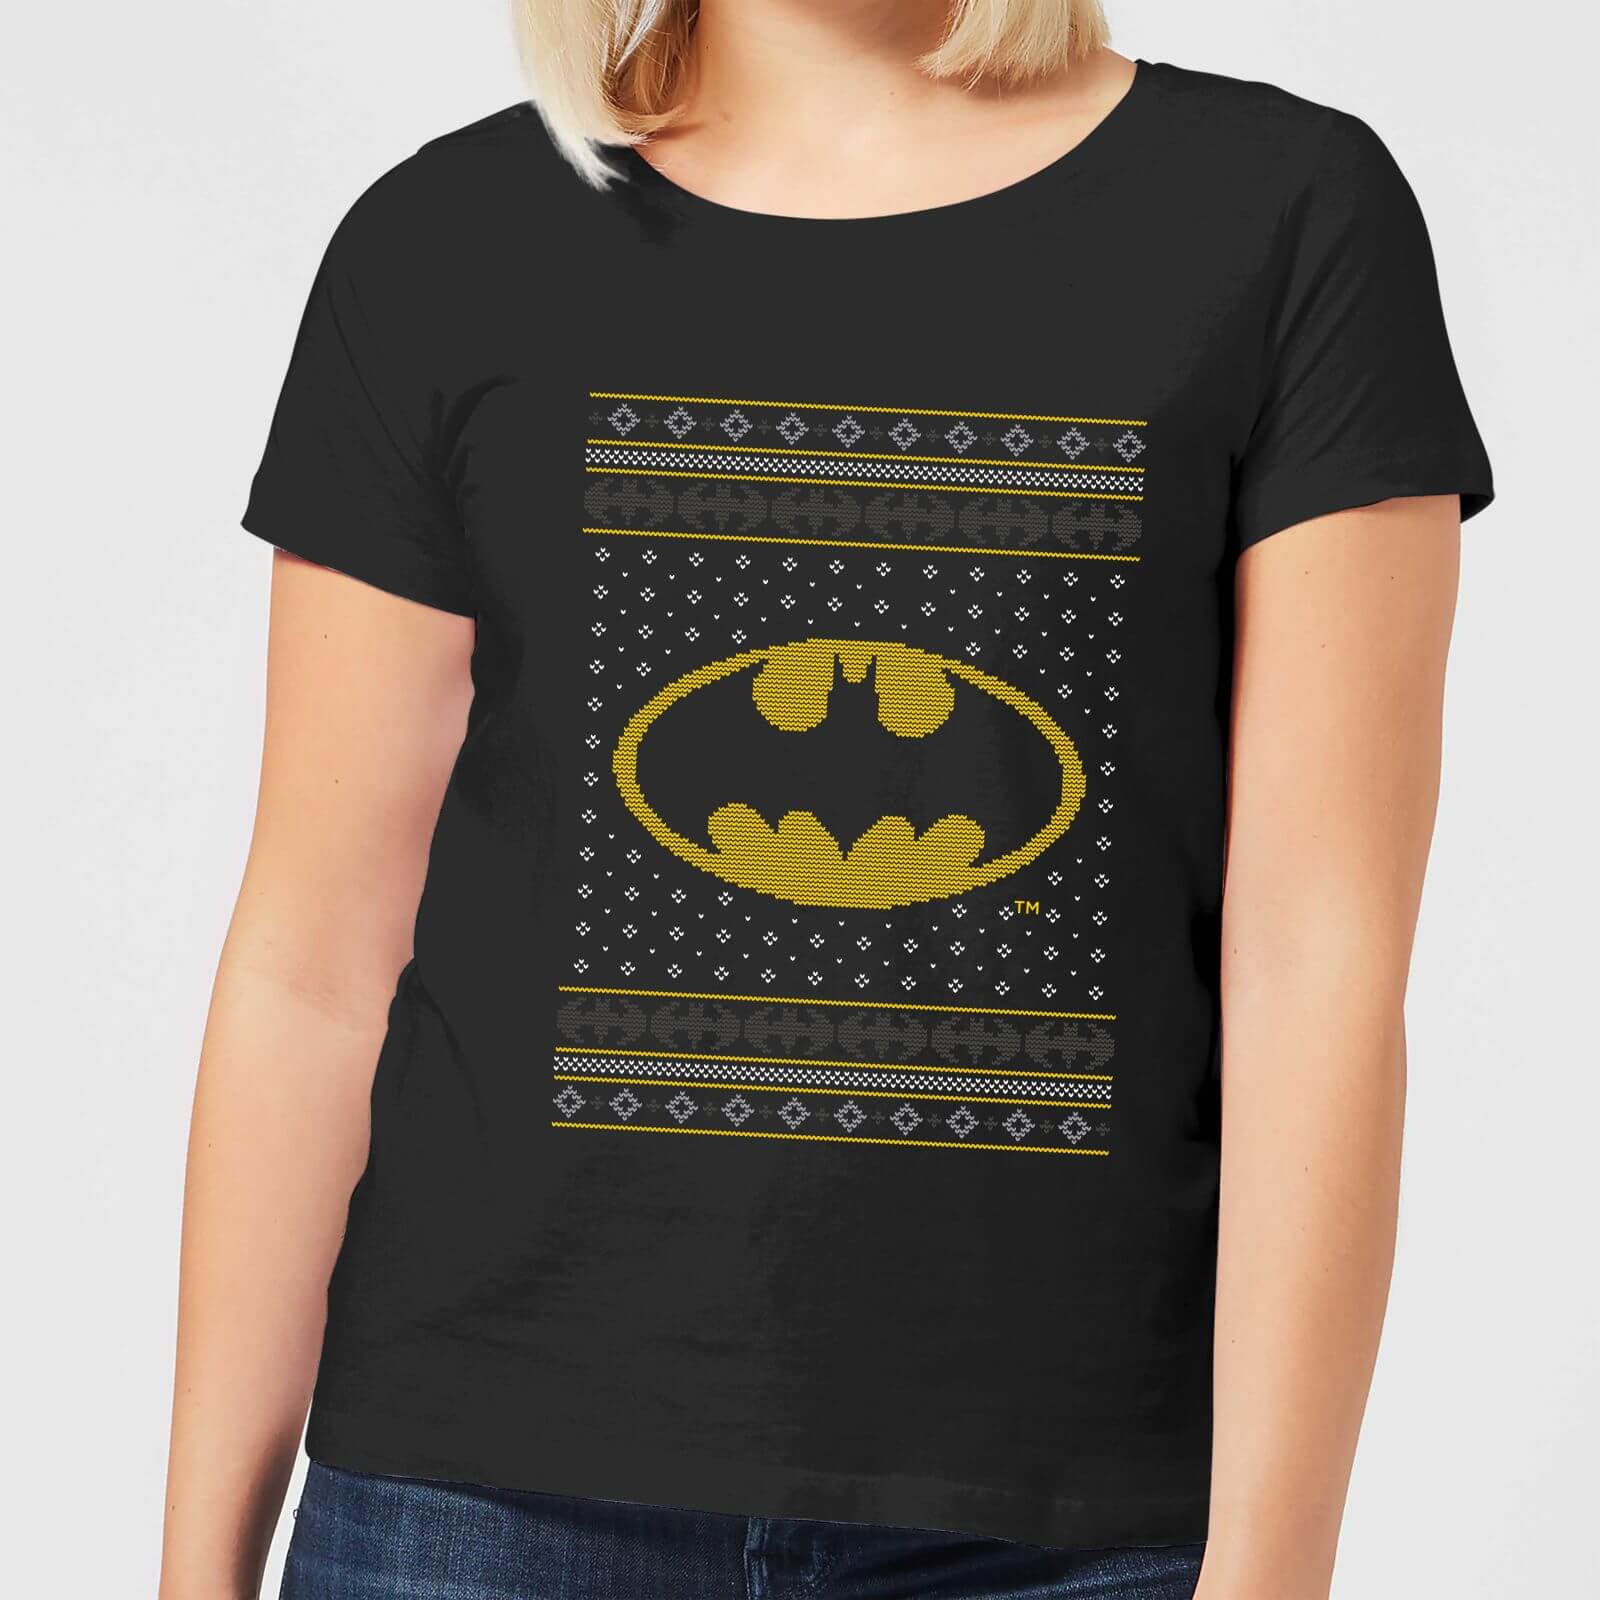 DC Comics Batman Knit Women's Christmas T-Shirt in Black - S - Black